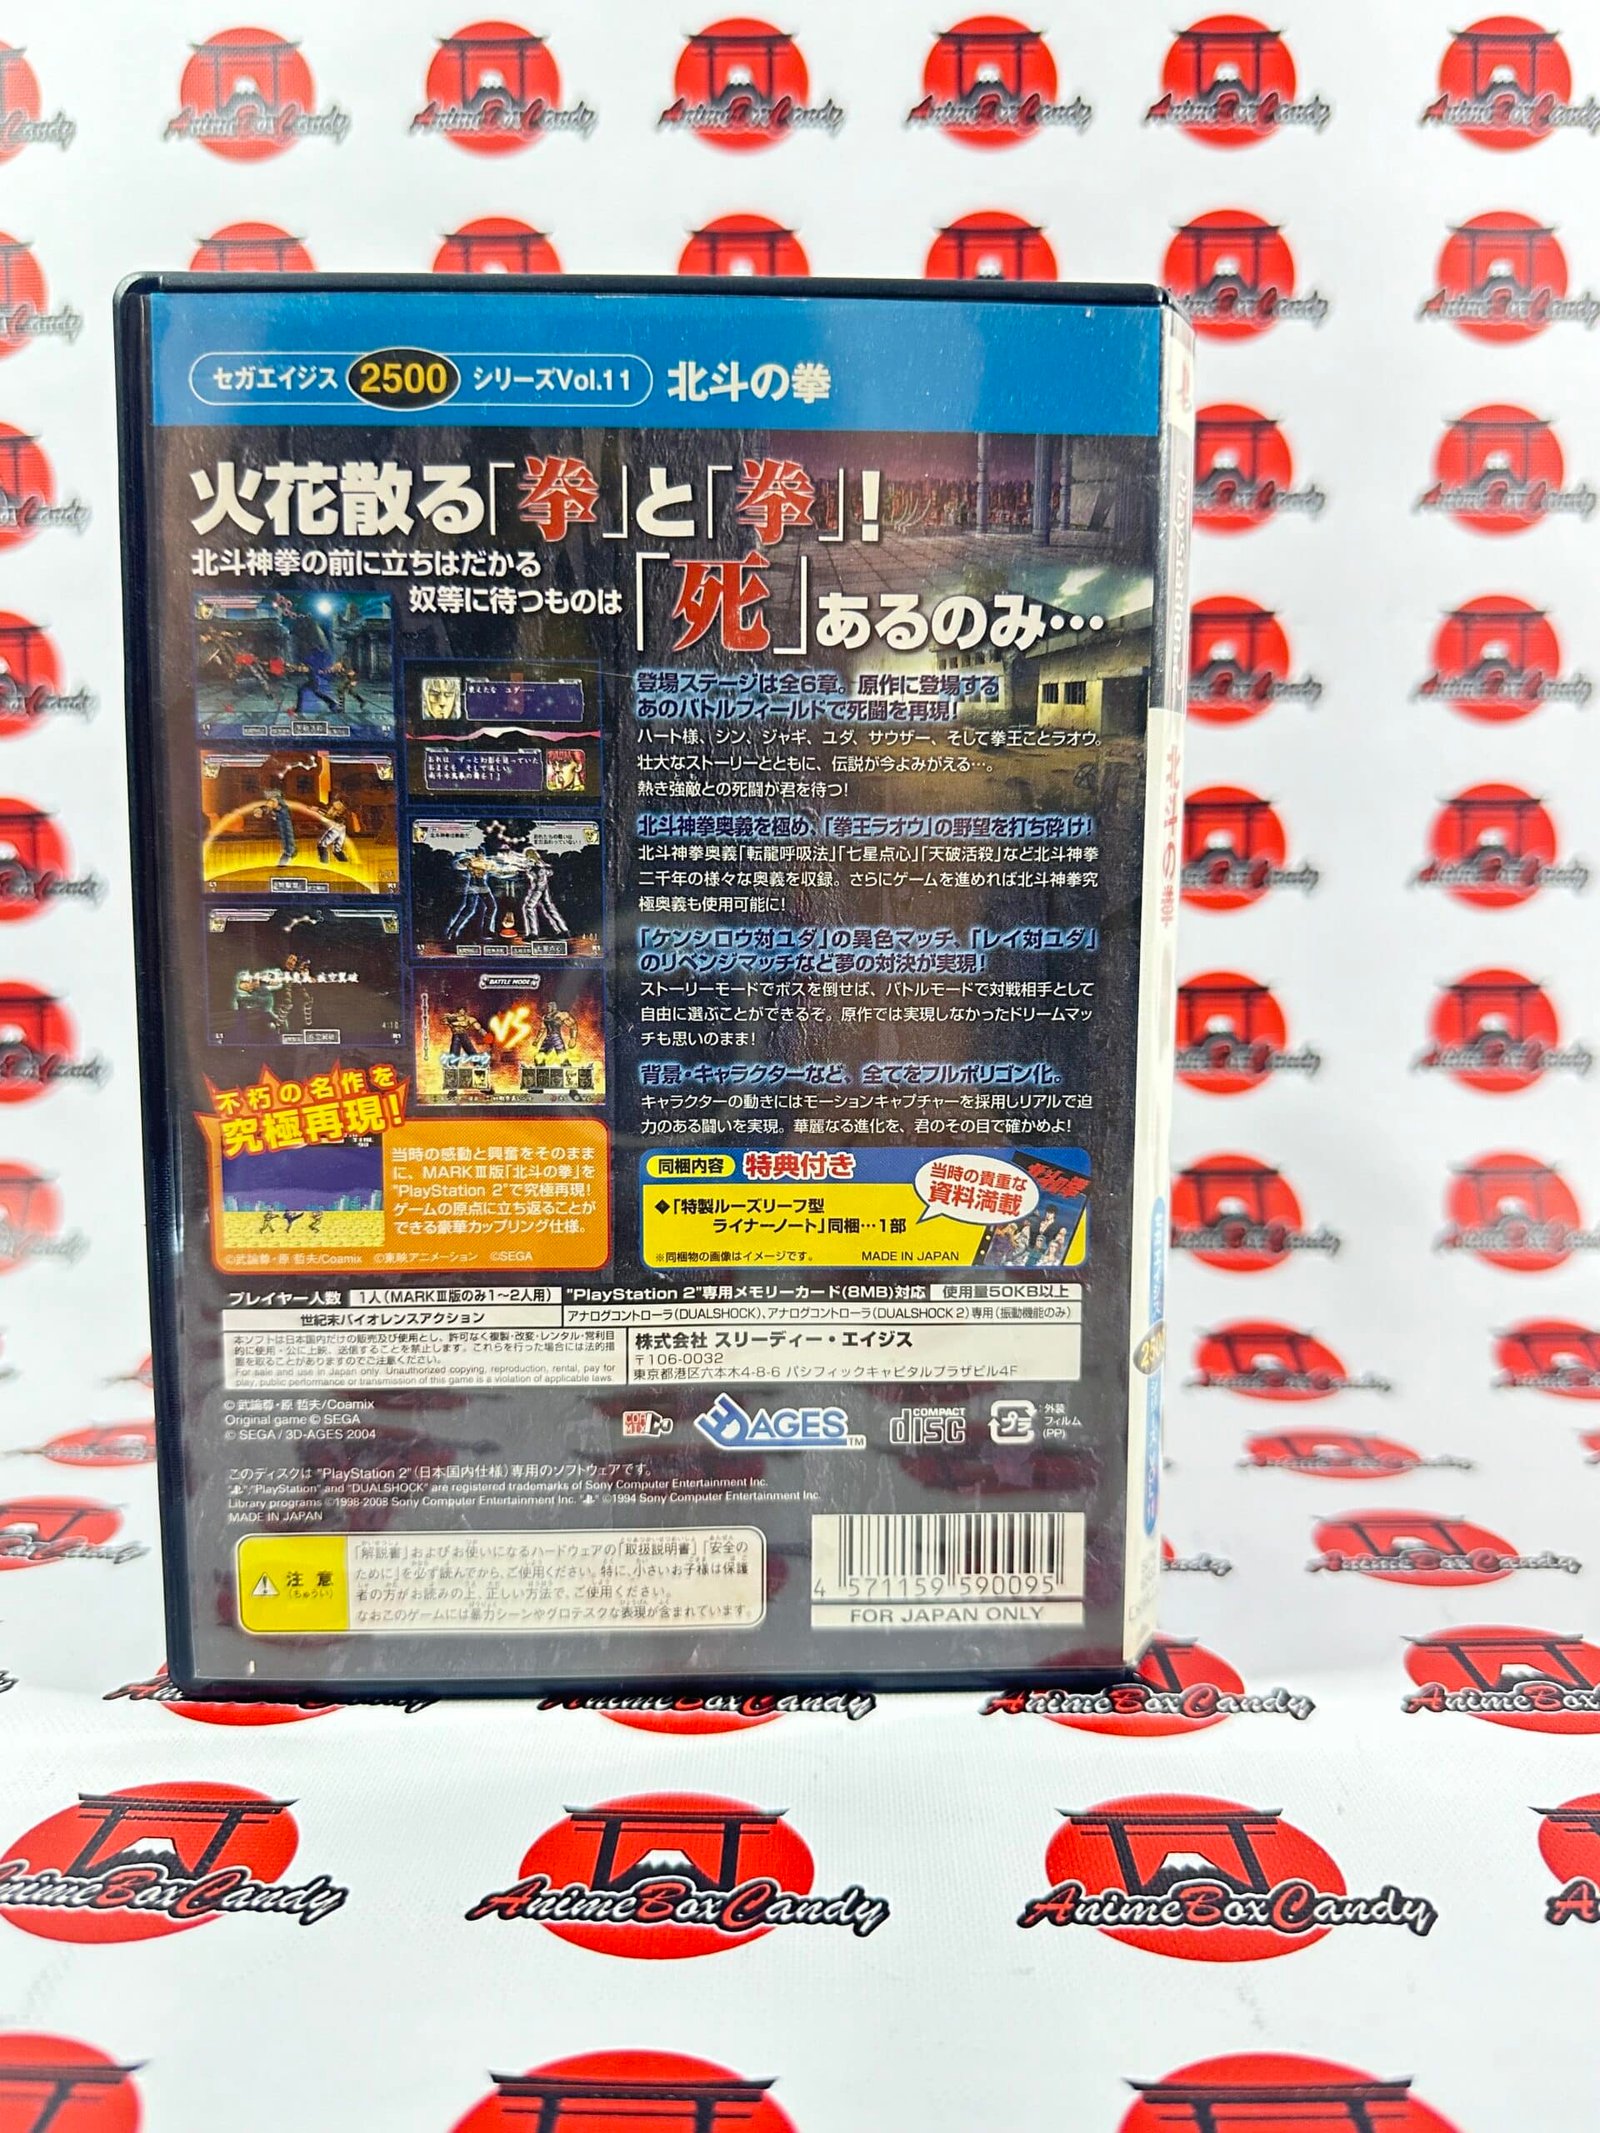 Hokuto no Ken Sega Ages 2500